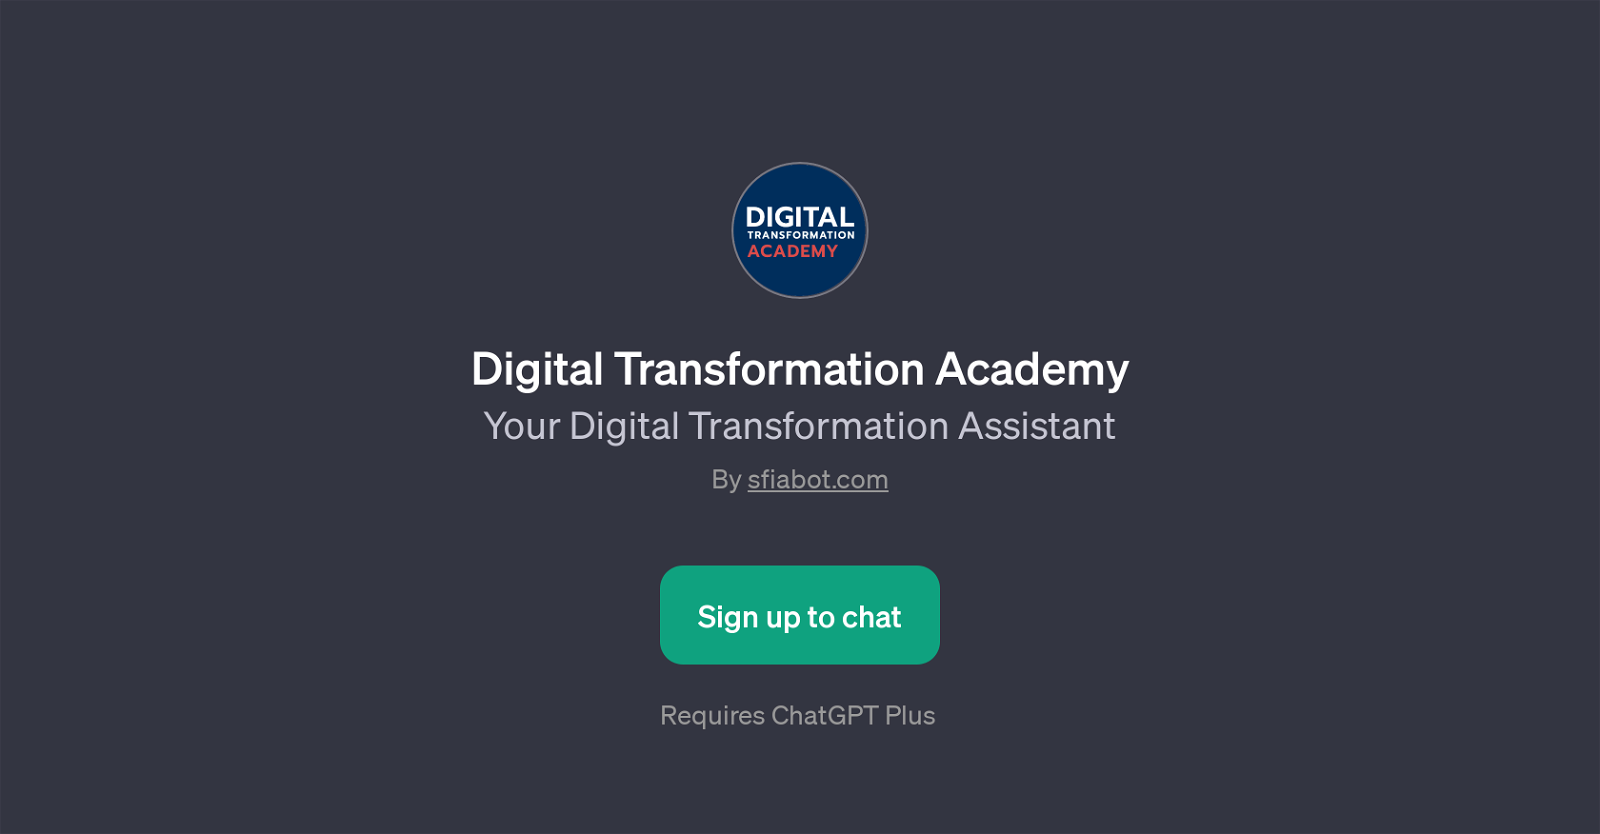 Digital Transformation Academy website